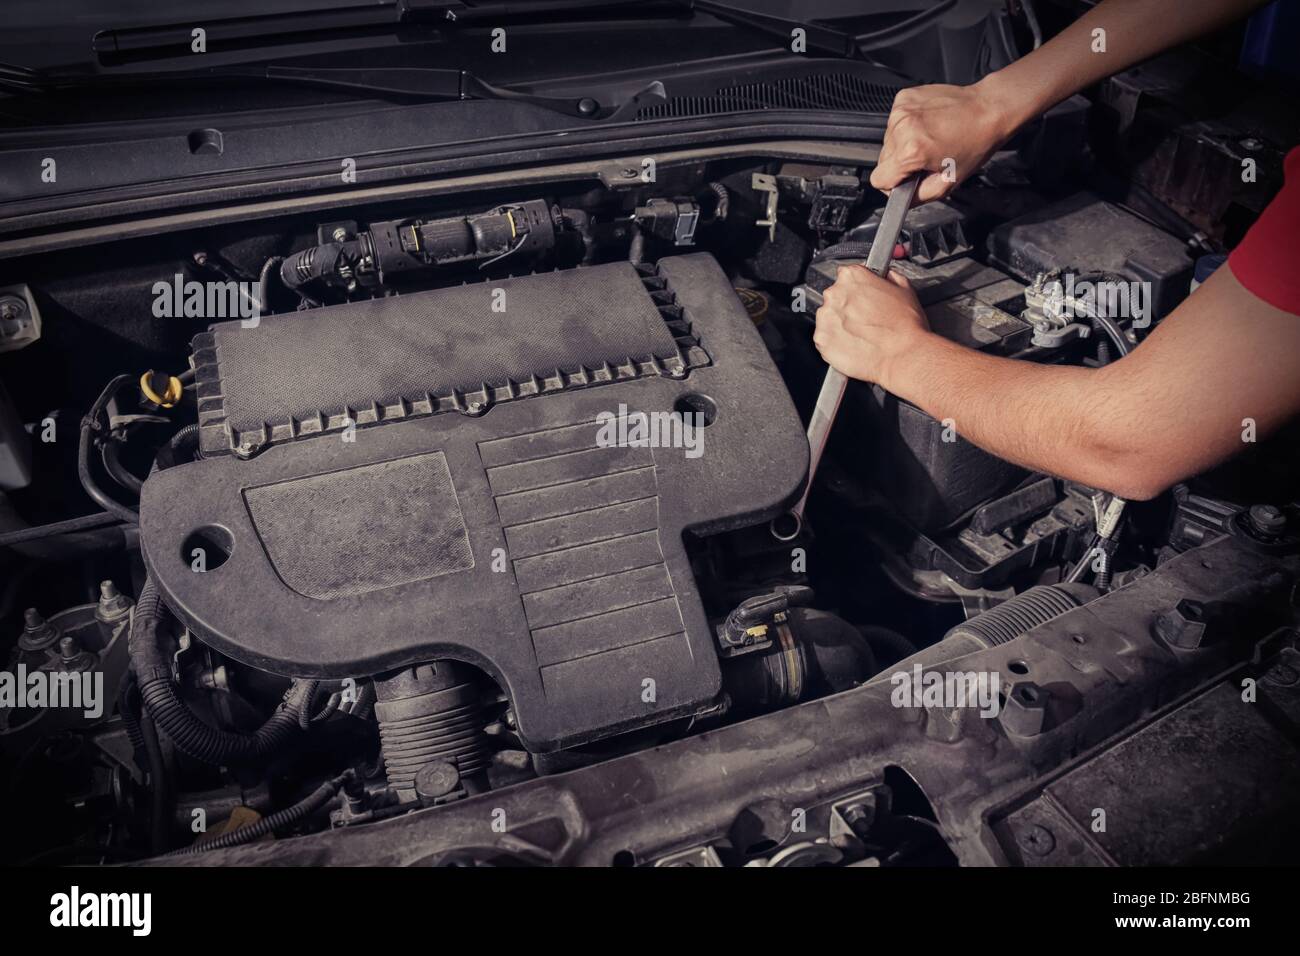 Auto mechanic repairing car in body shop Stock Photo